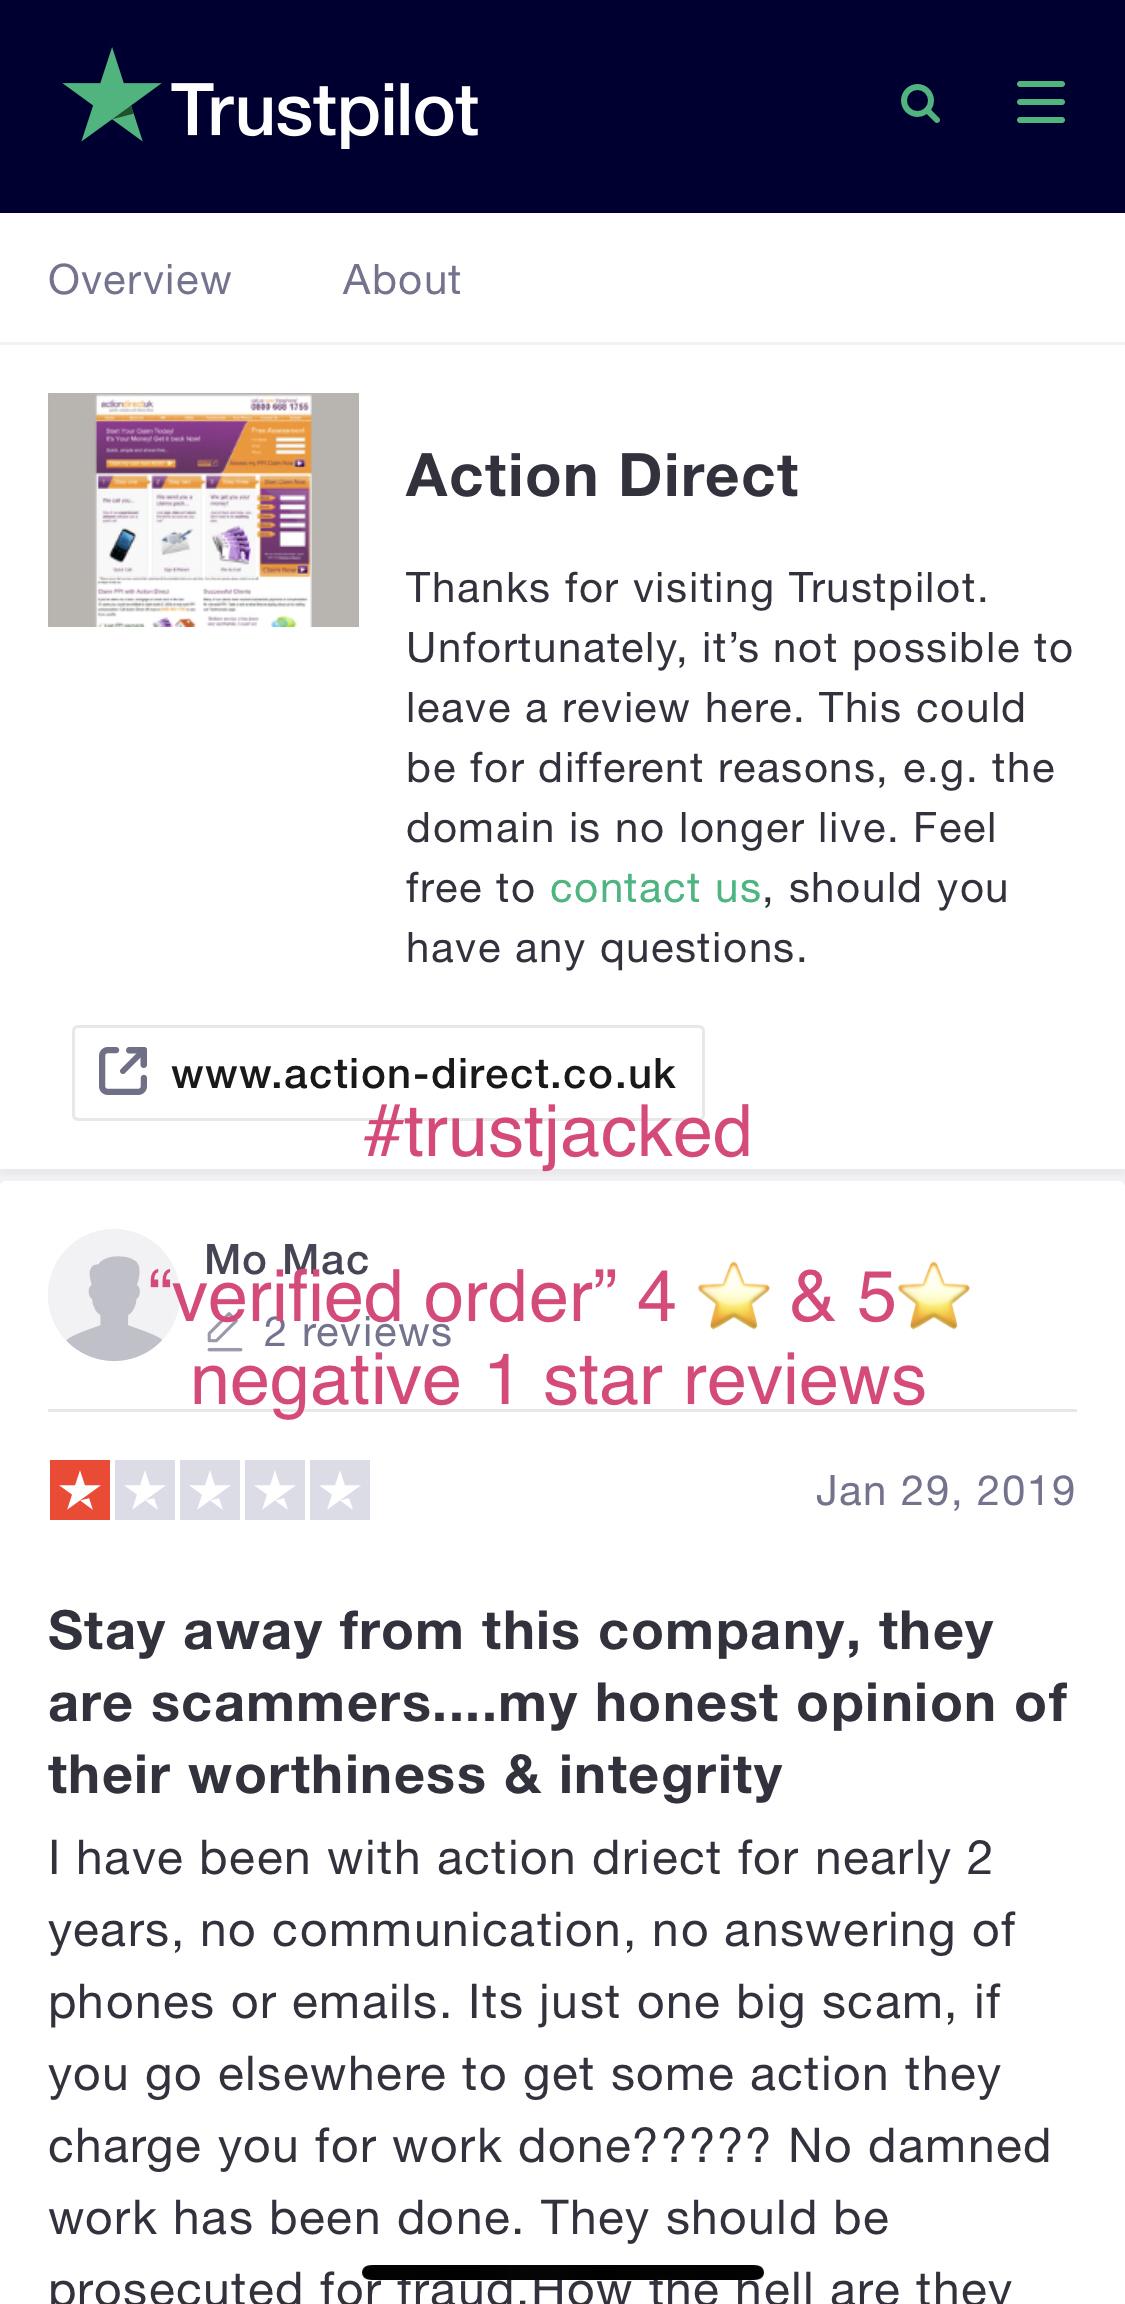 Action Direct reviews on Trustpilot